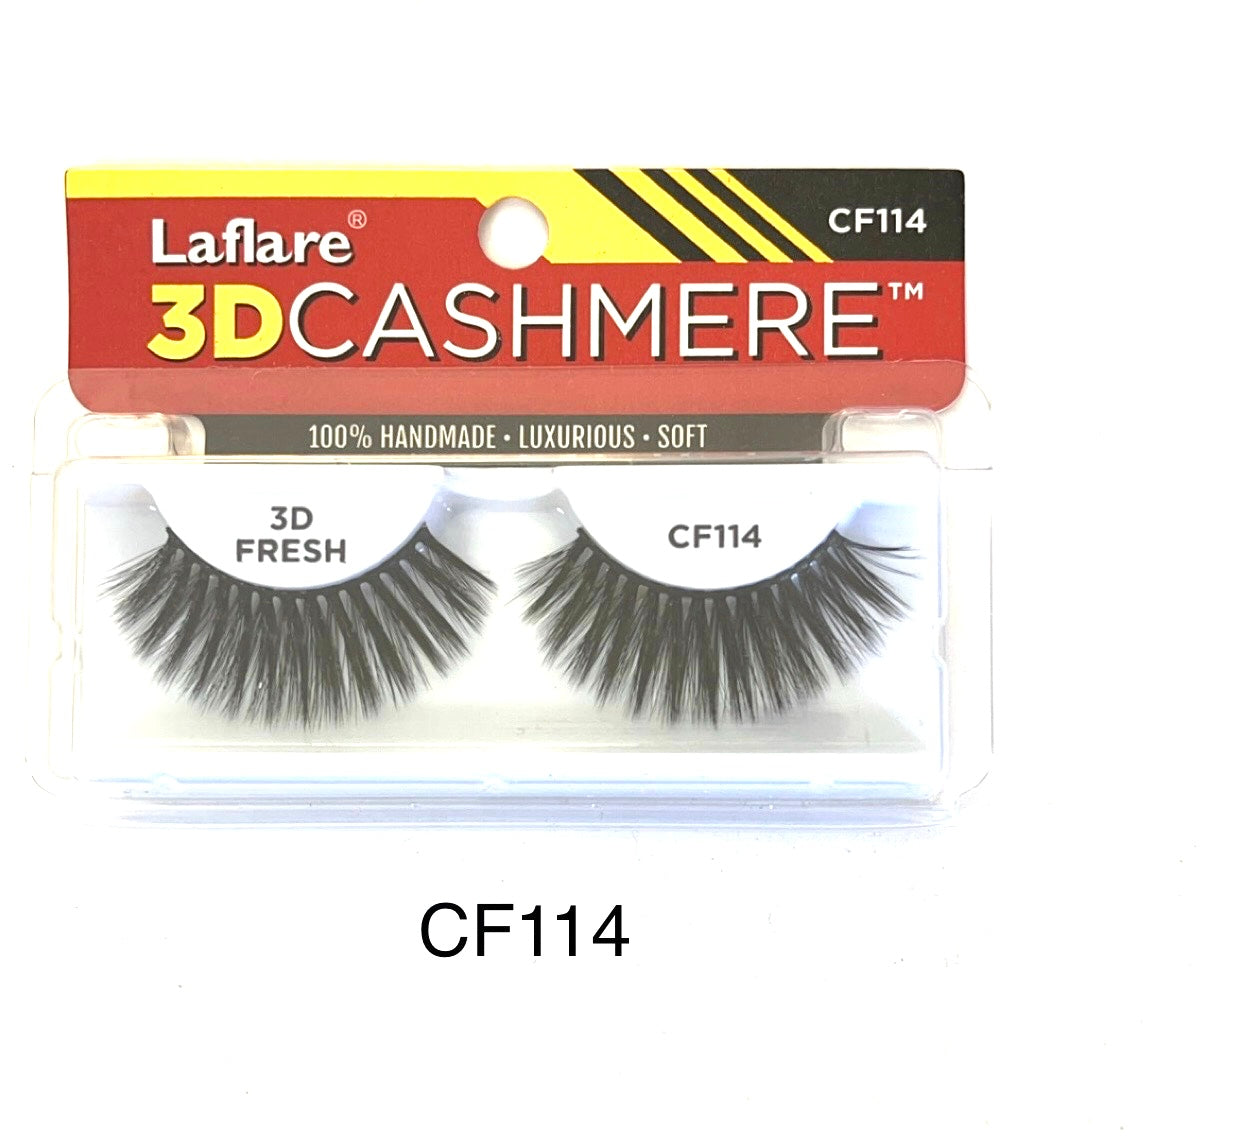 Laflare 3D Cashmere CF114